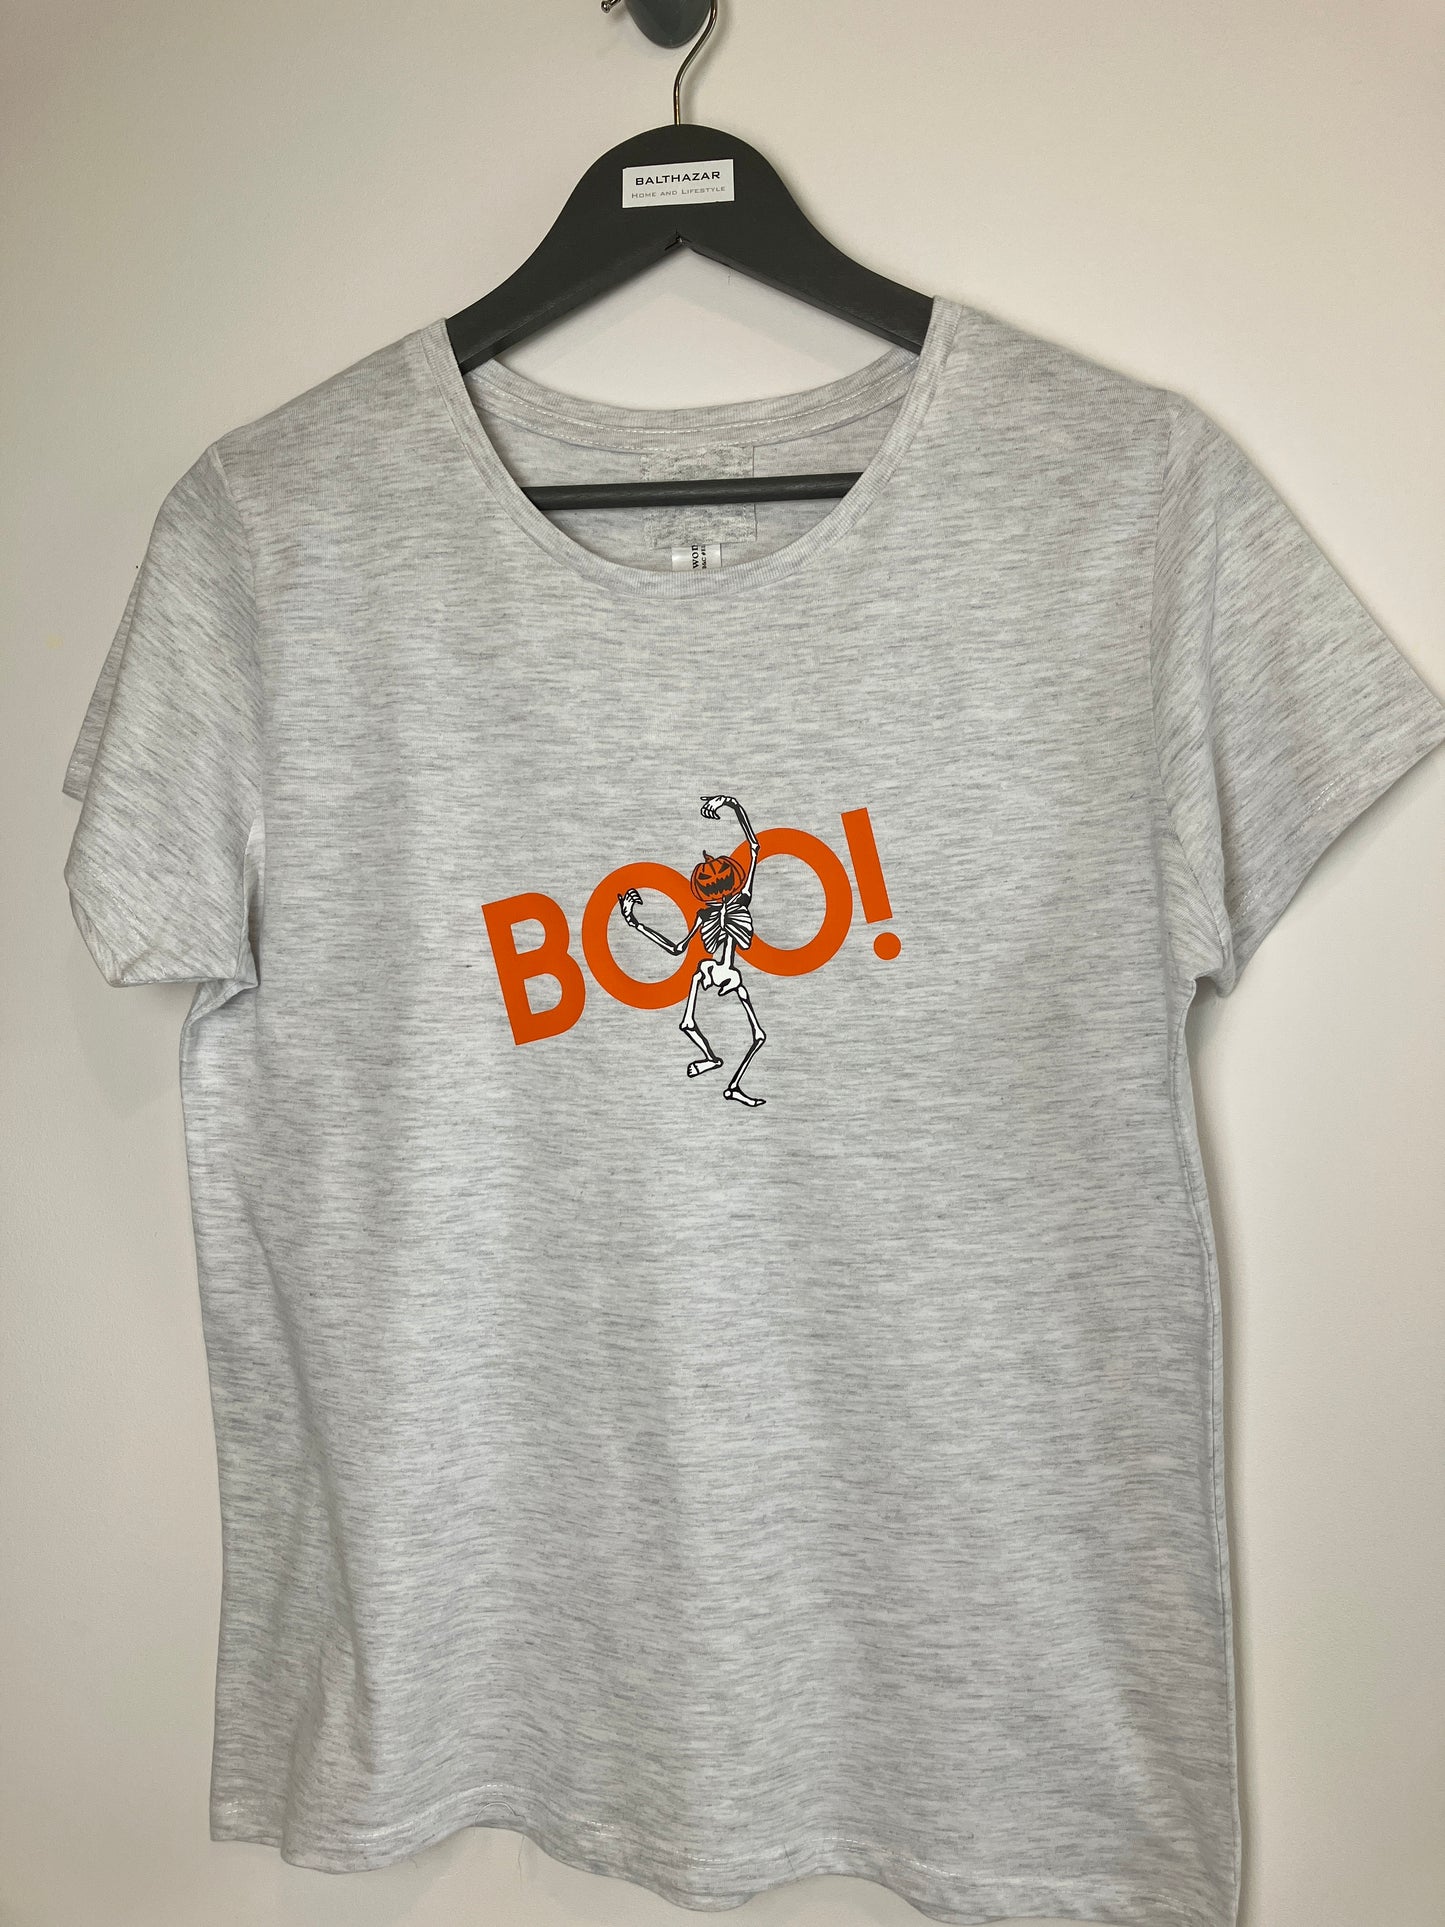 Boo!Pumpkin skeleton t-shirt - Limited Edition